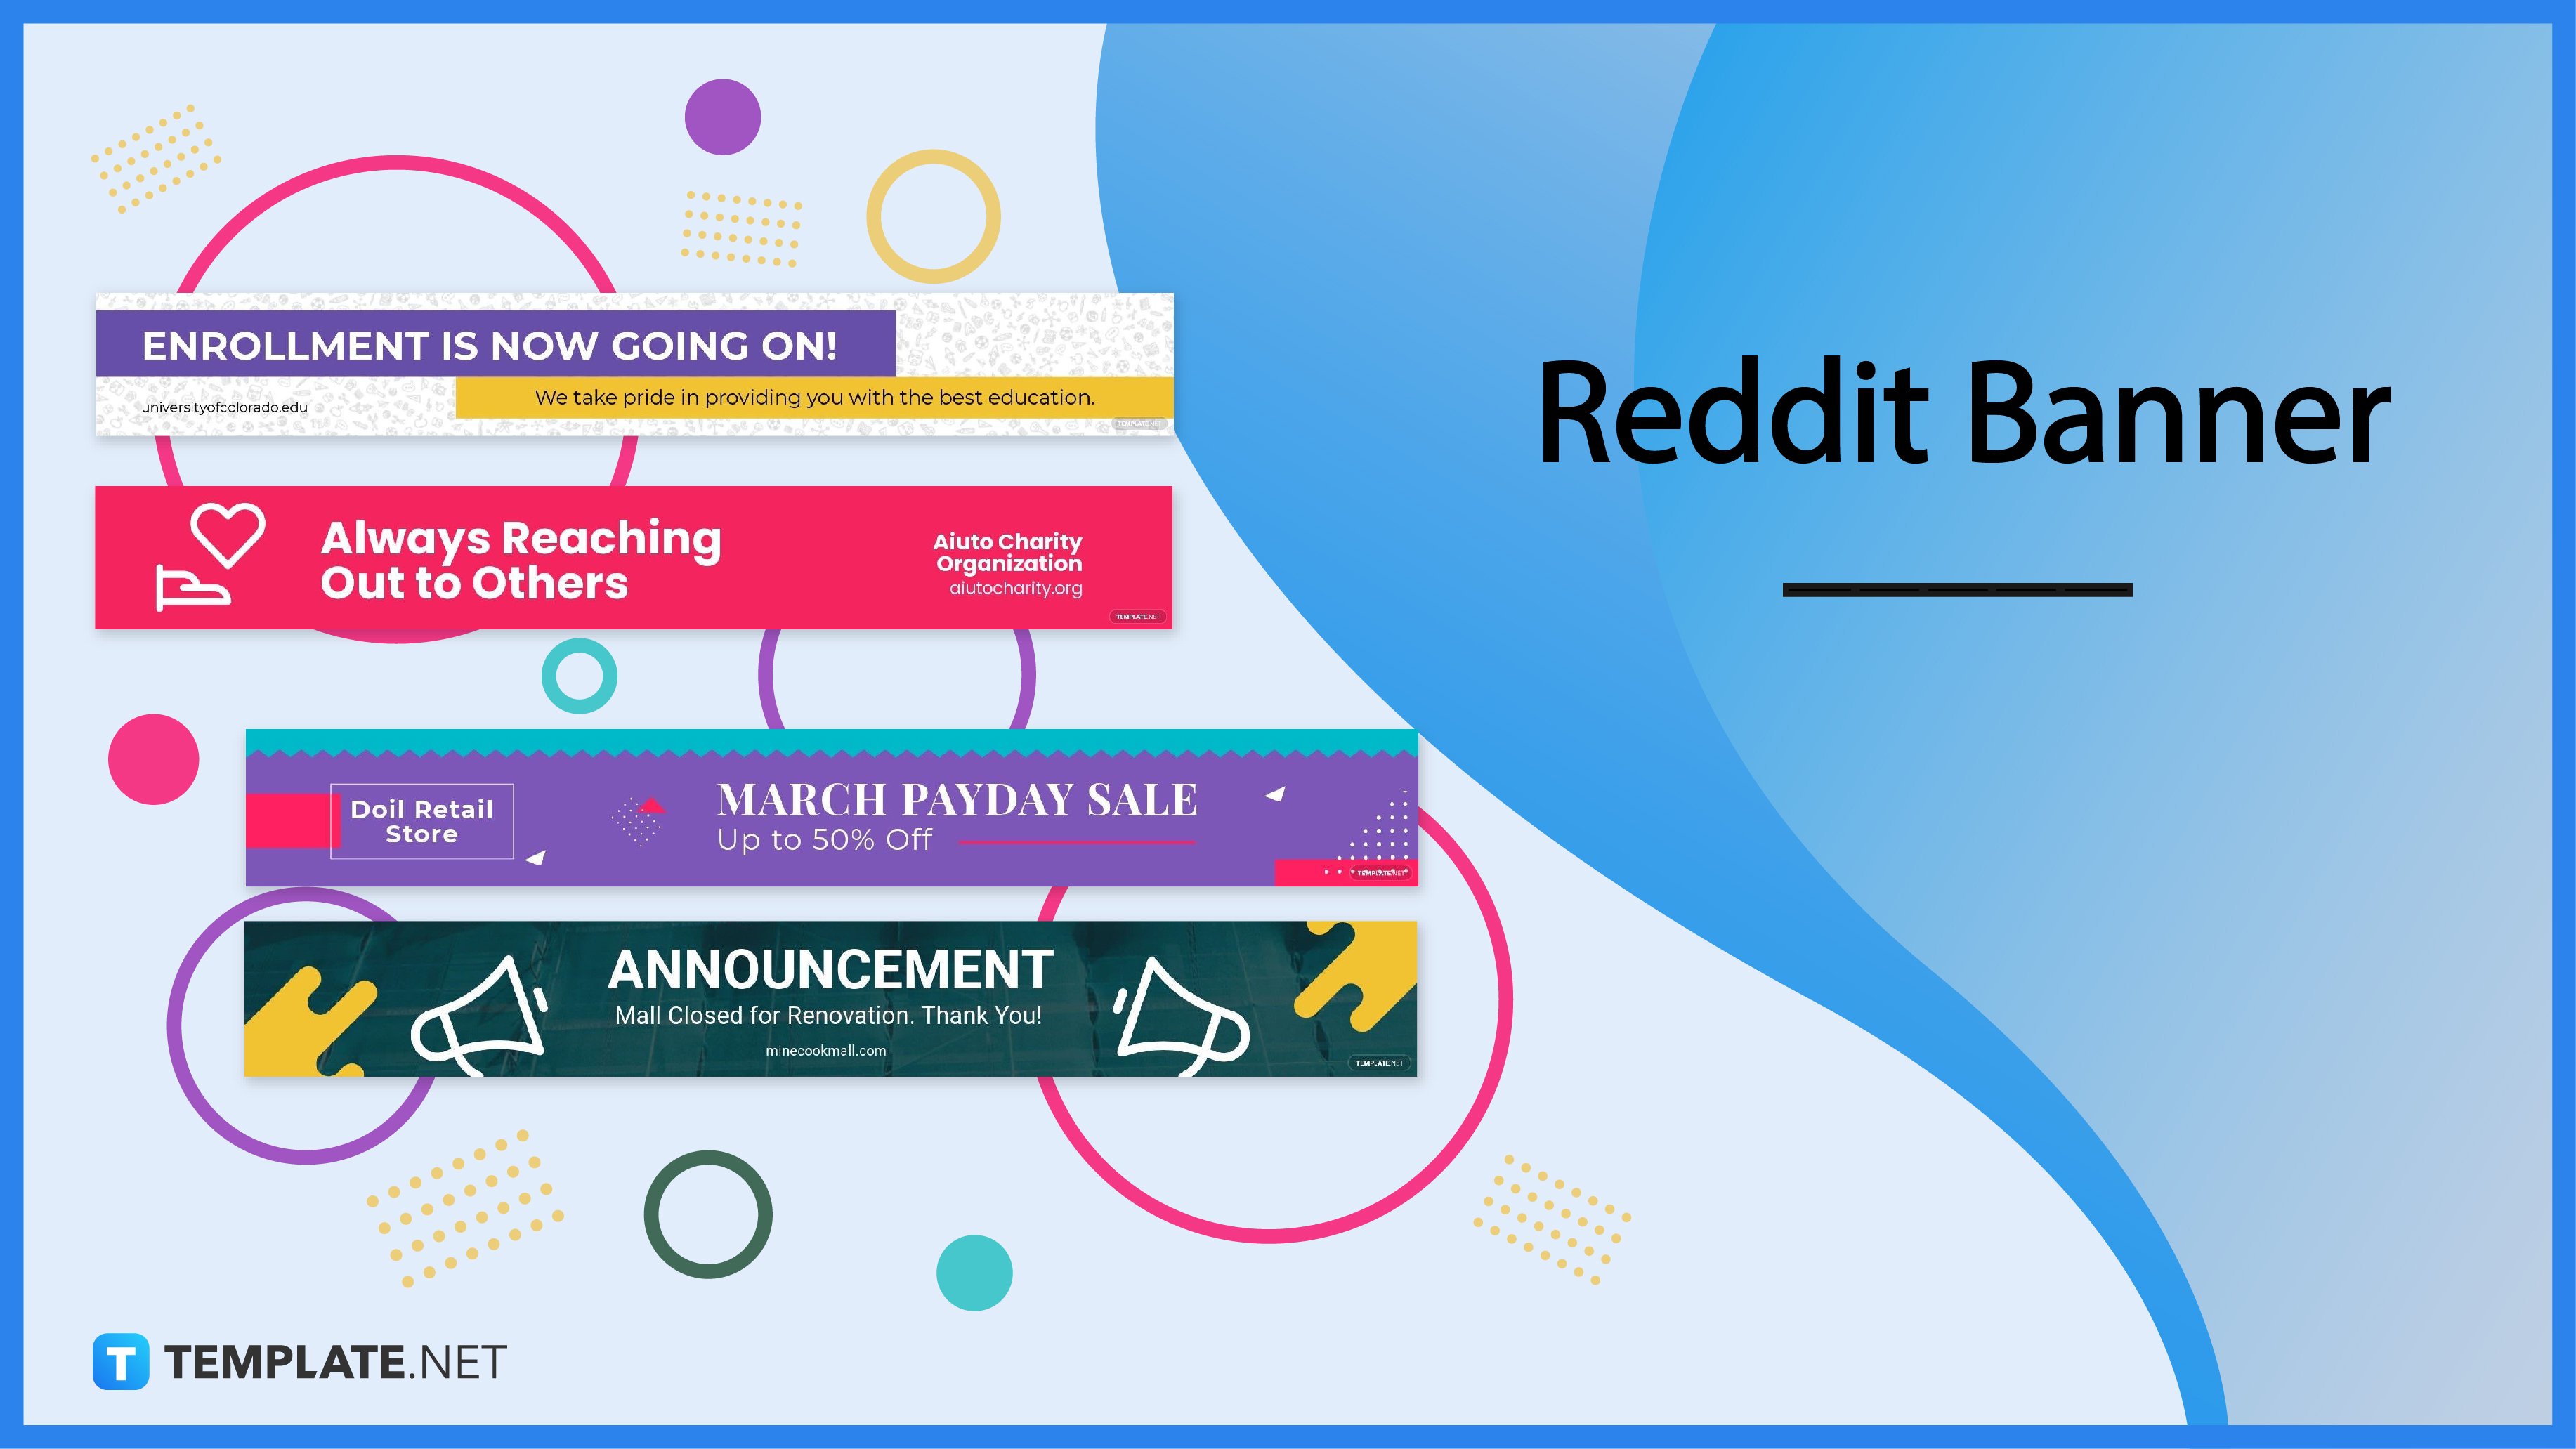 Reddit Banner